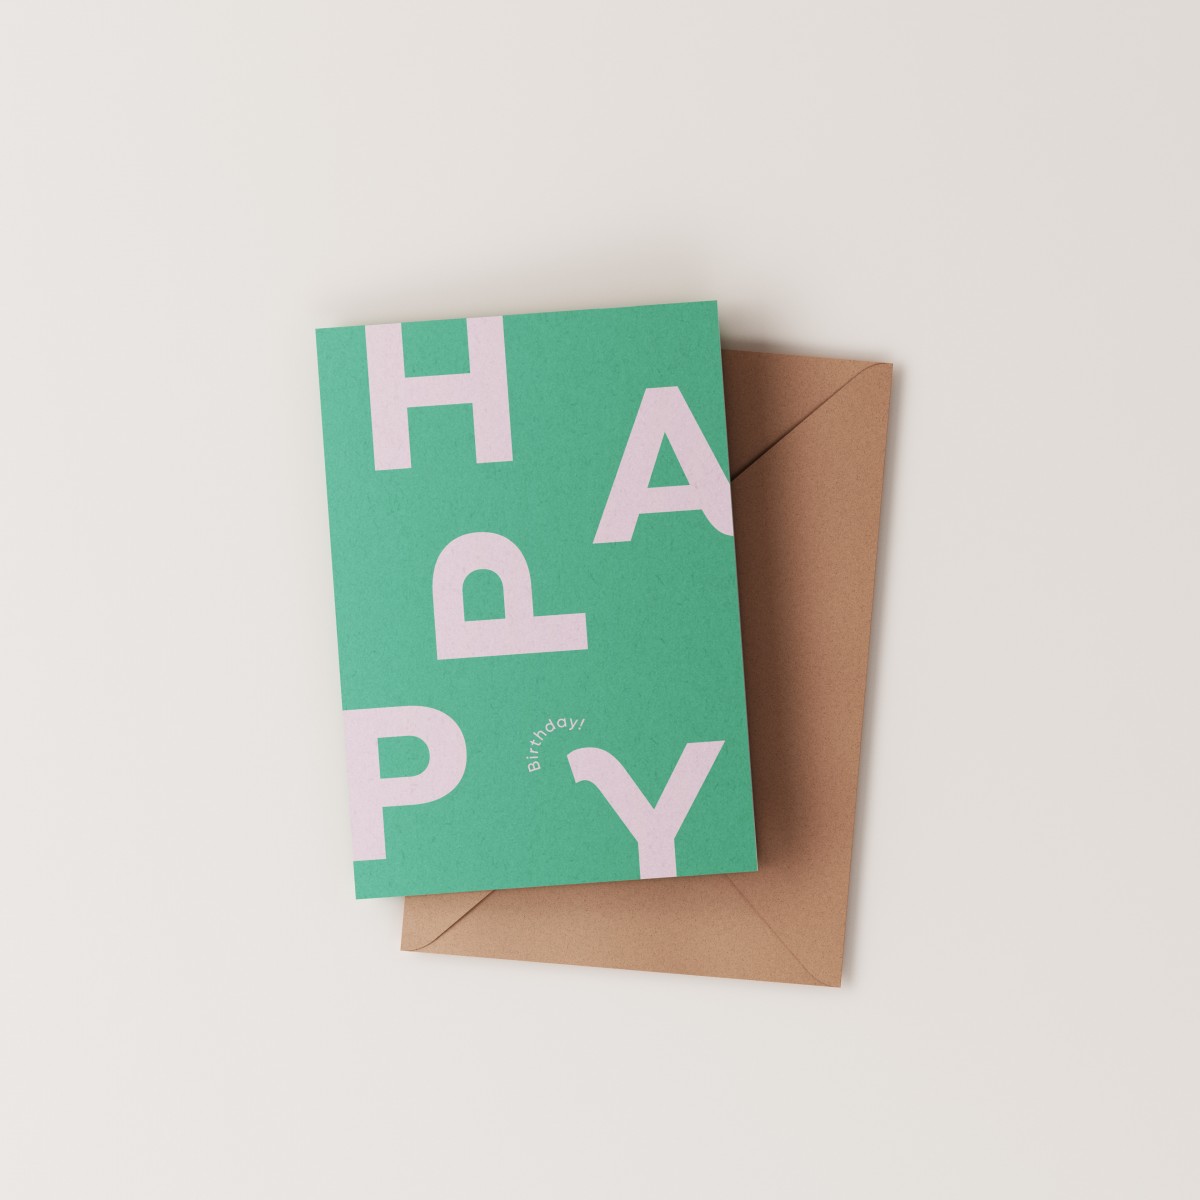 Grußkarten - HAPPY BIRTHDAY / DANKE / LOVE

